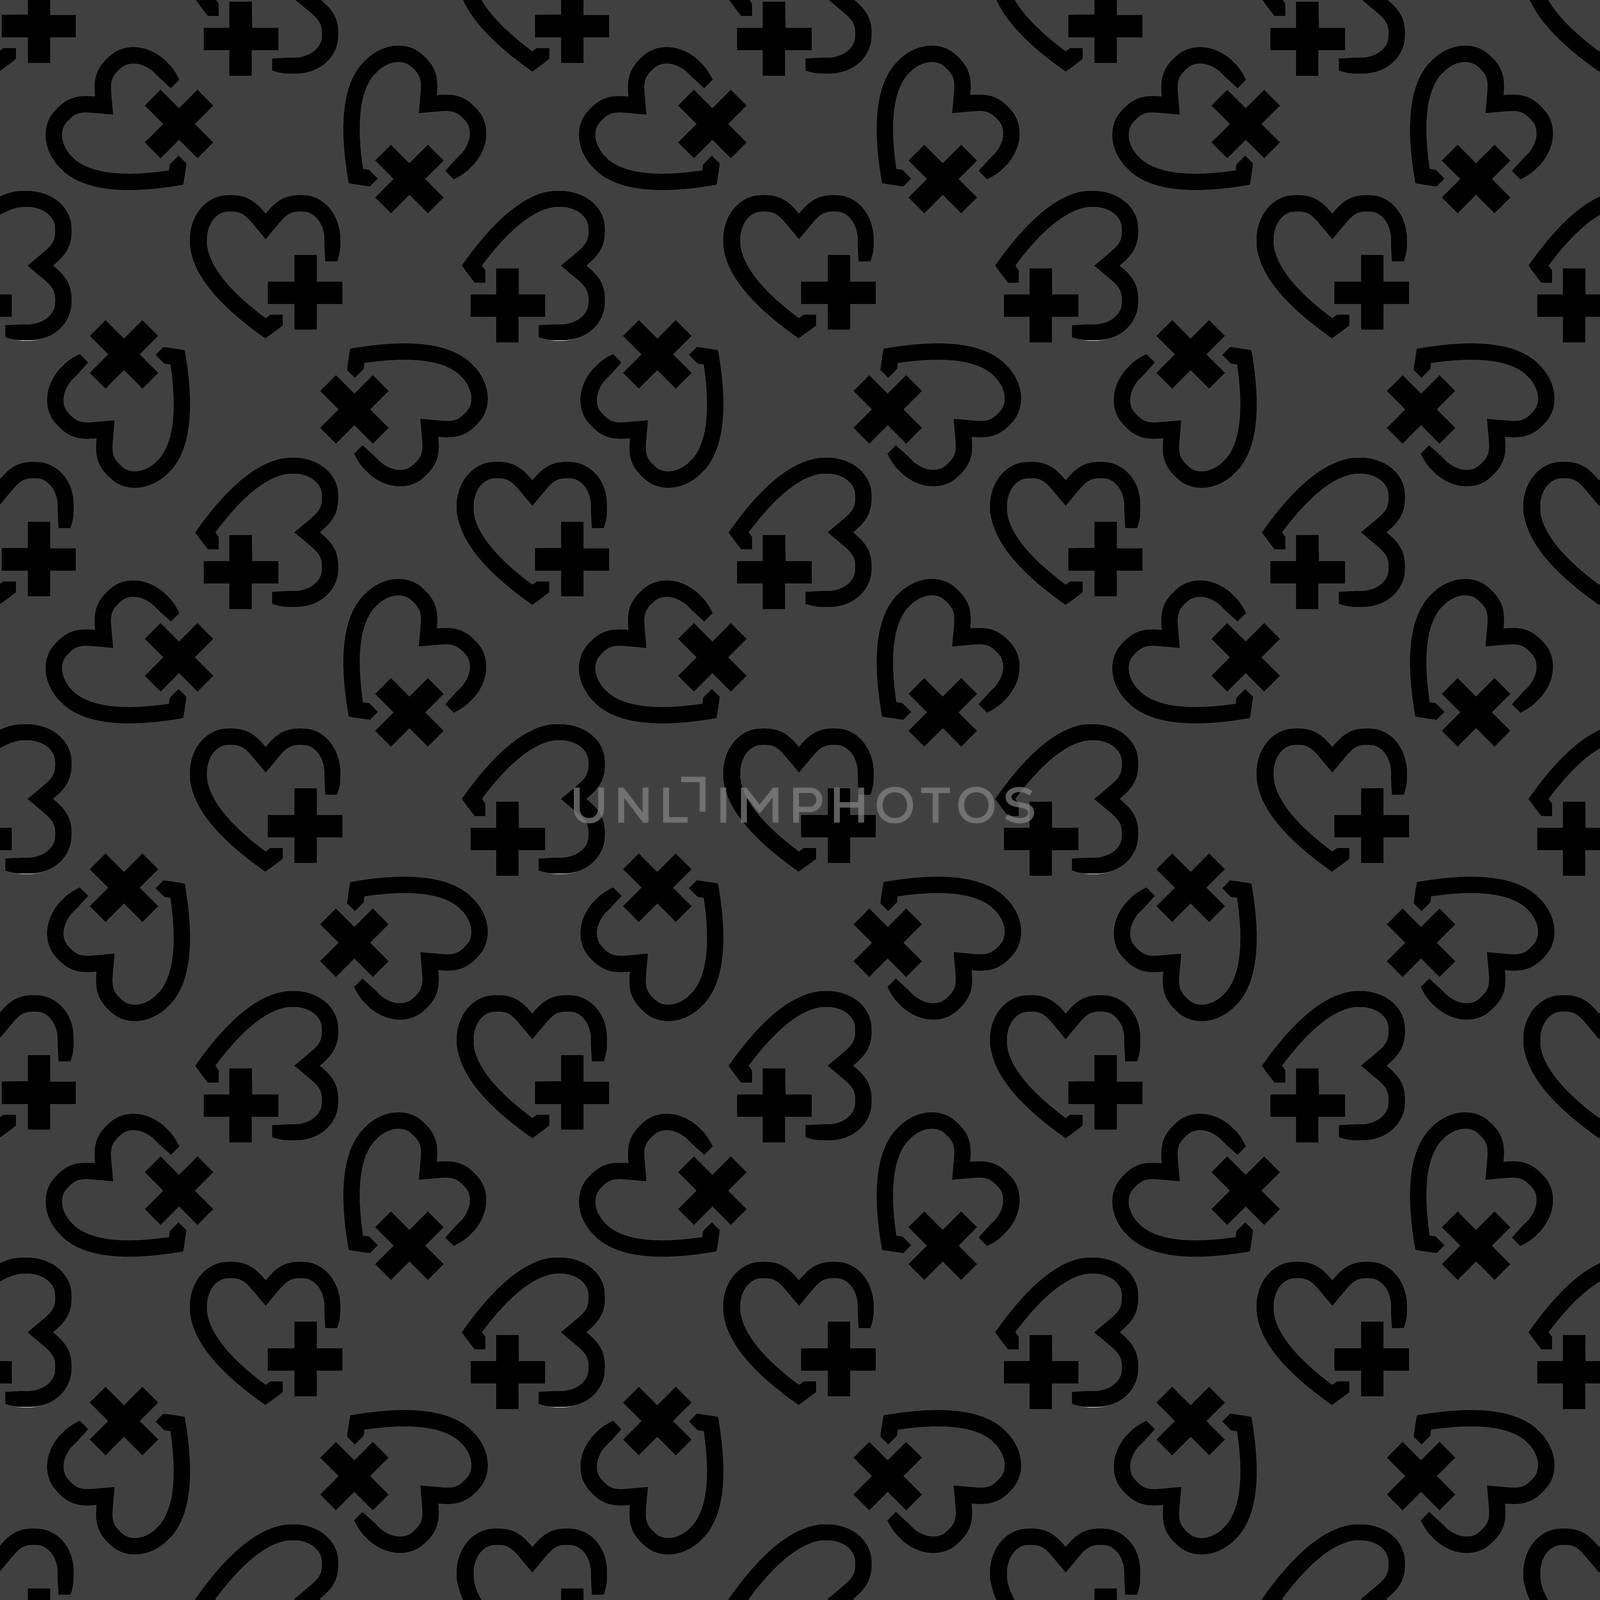 Heart web icon. flat design. Seamless pattern.